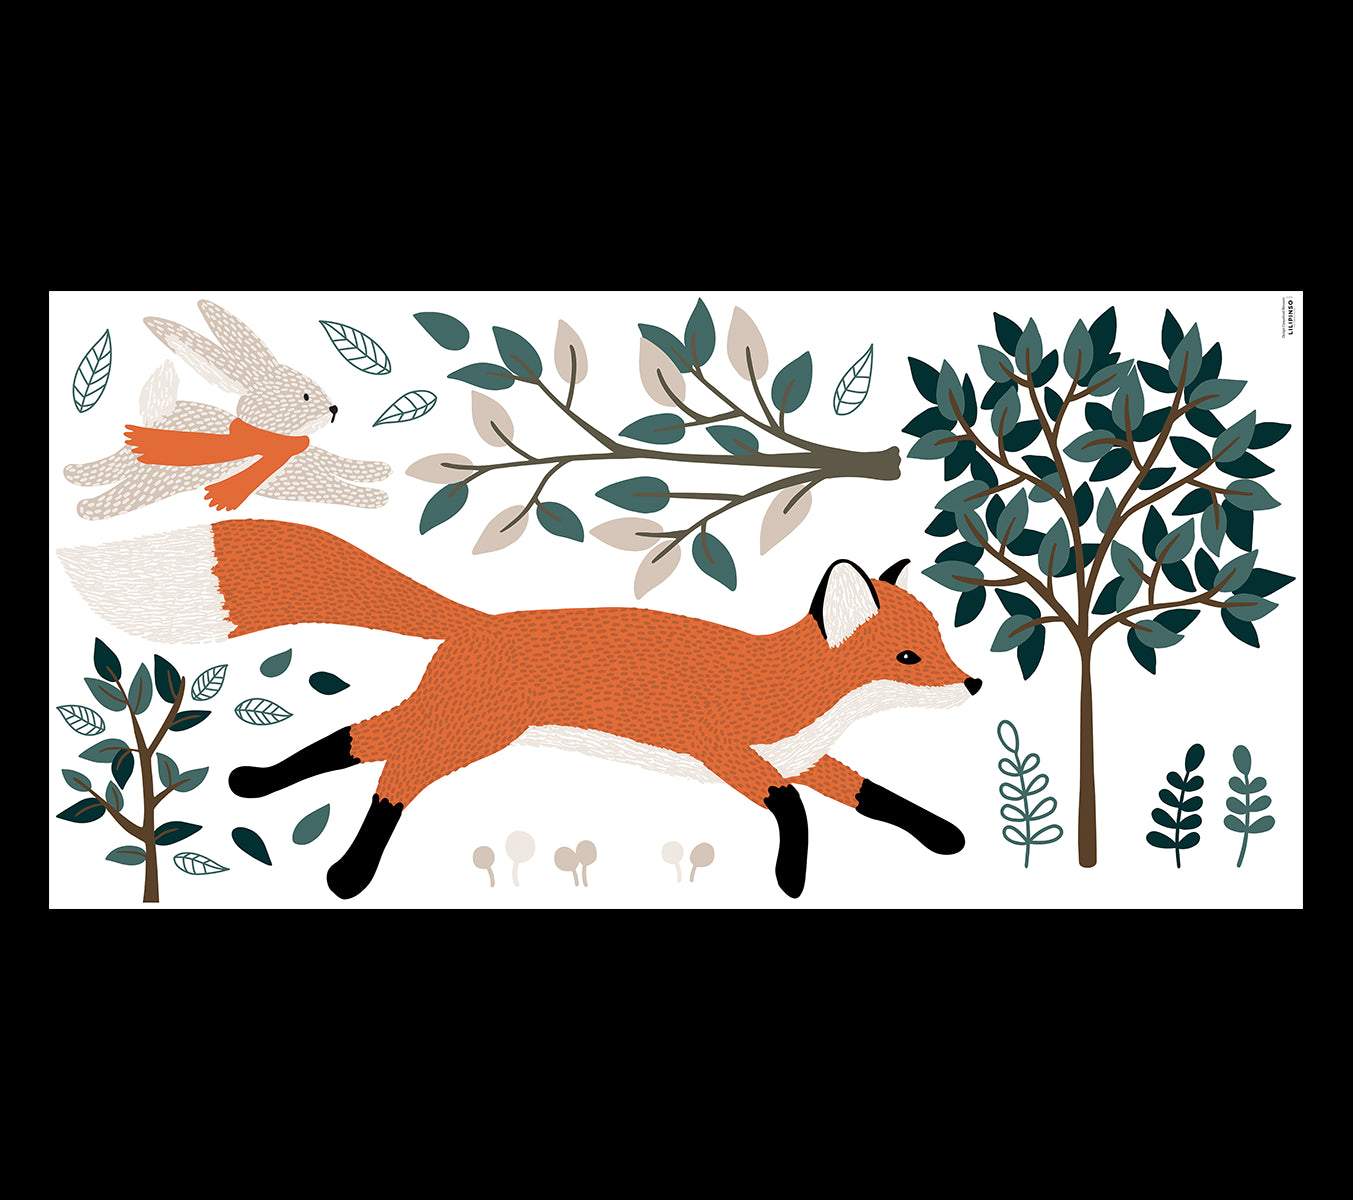 M. FOX - Stickers muraux - Forêt, renard et lapin